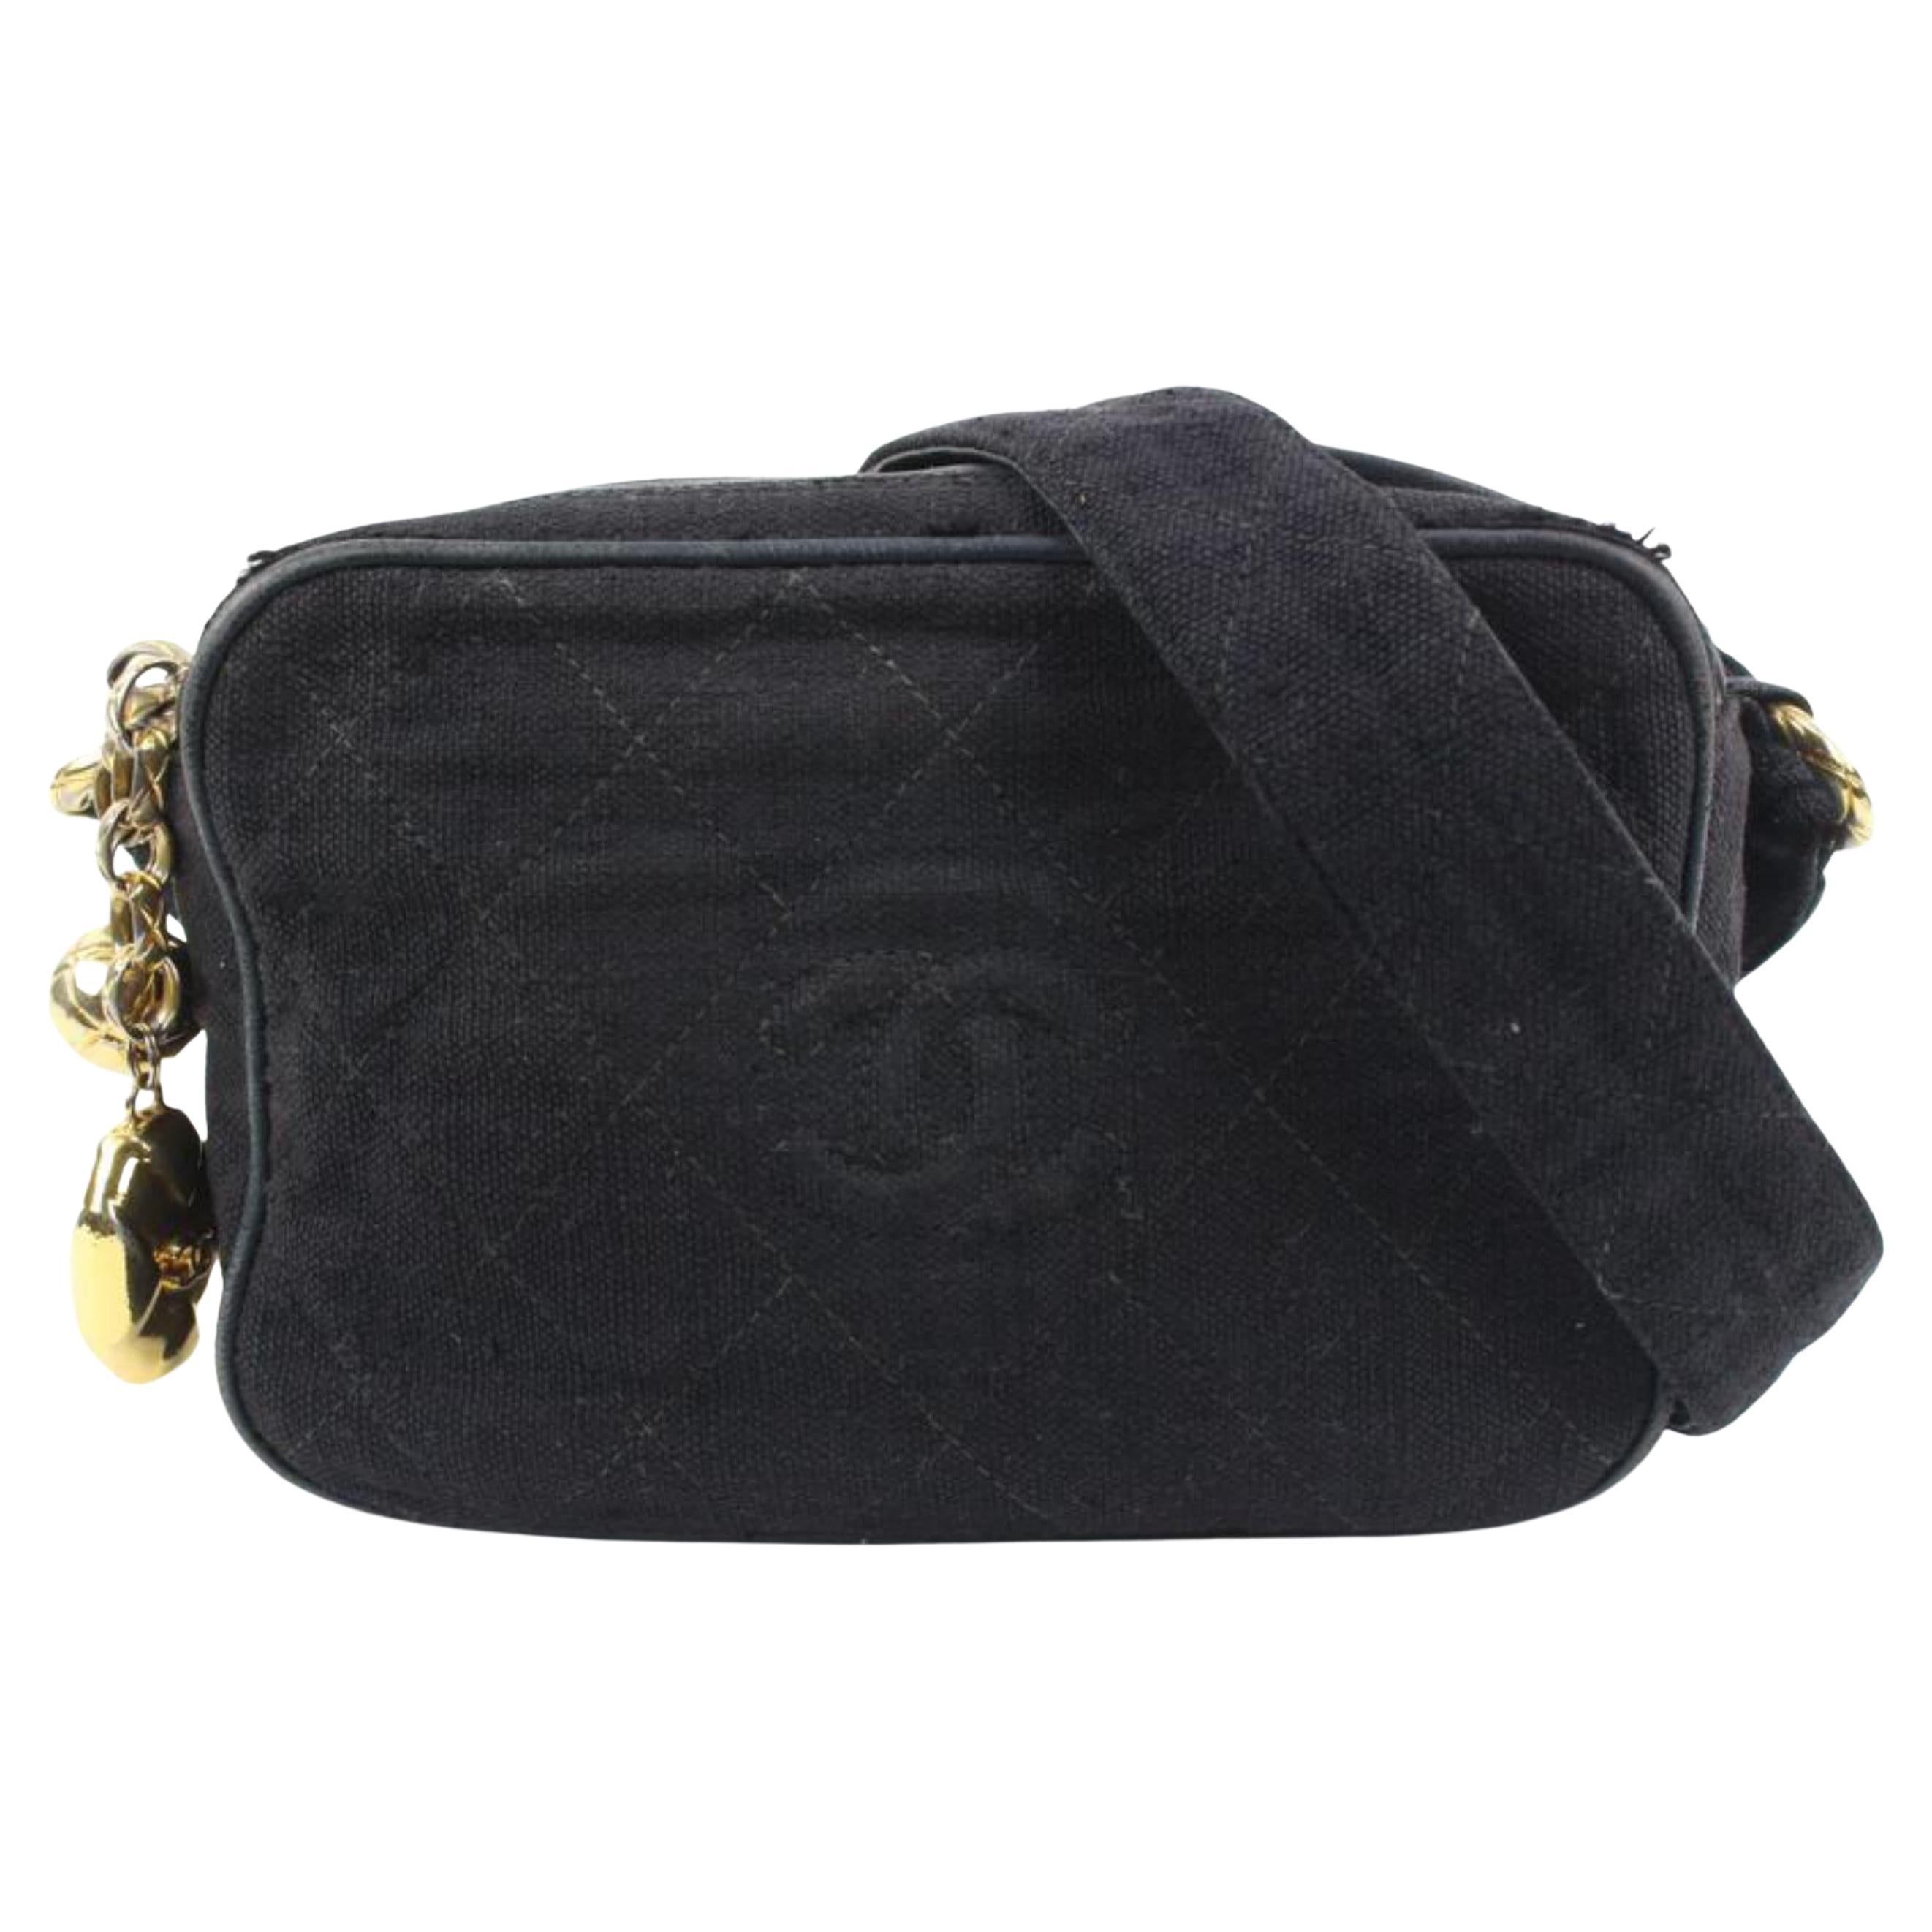 Chanel Ultra Rare Black Woven Gold Charm Camera Bag 57ck32s